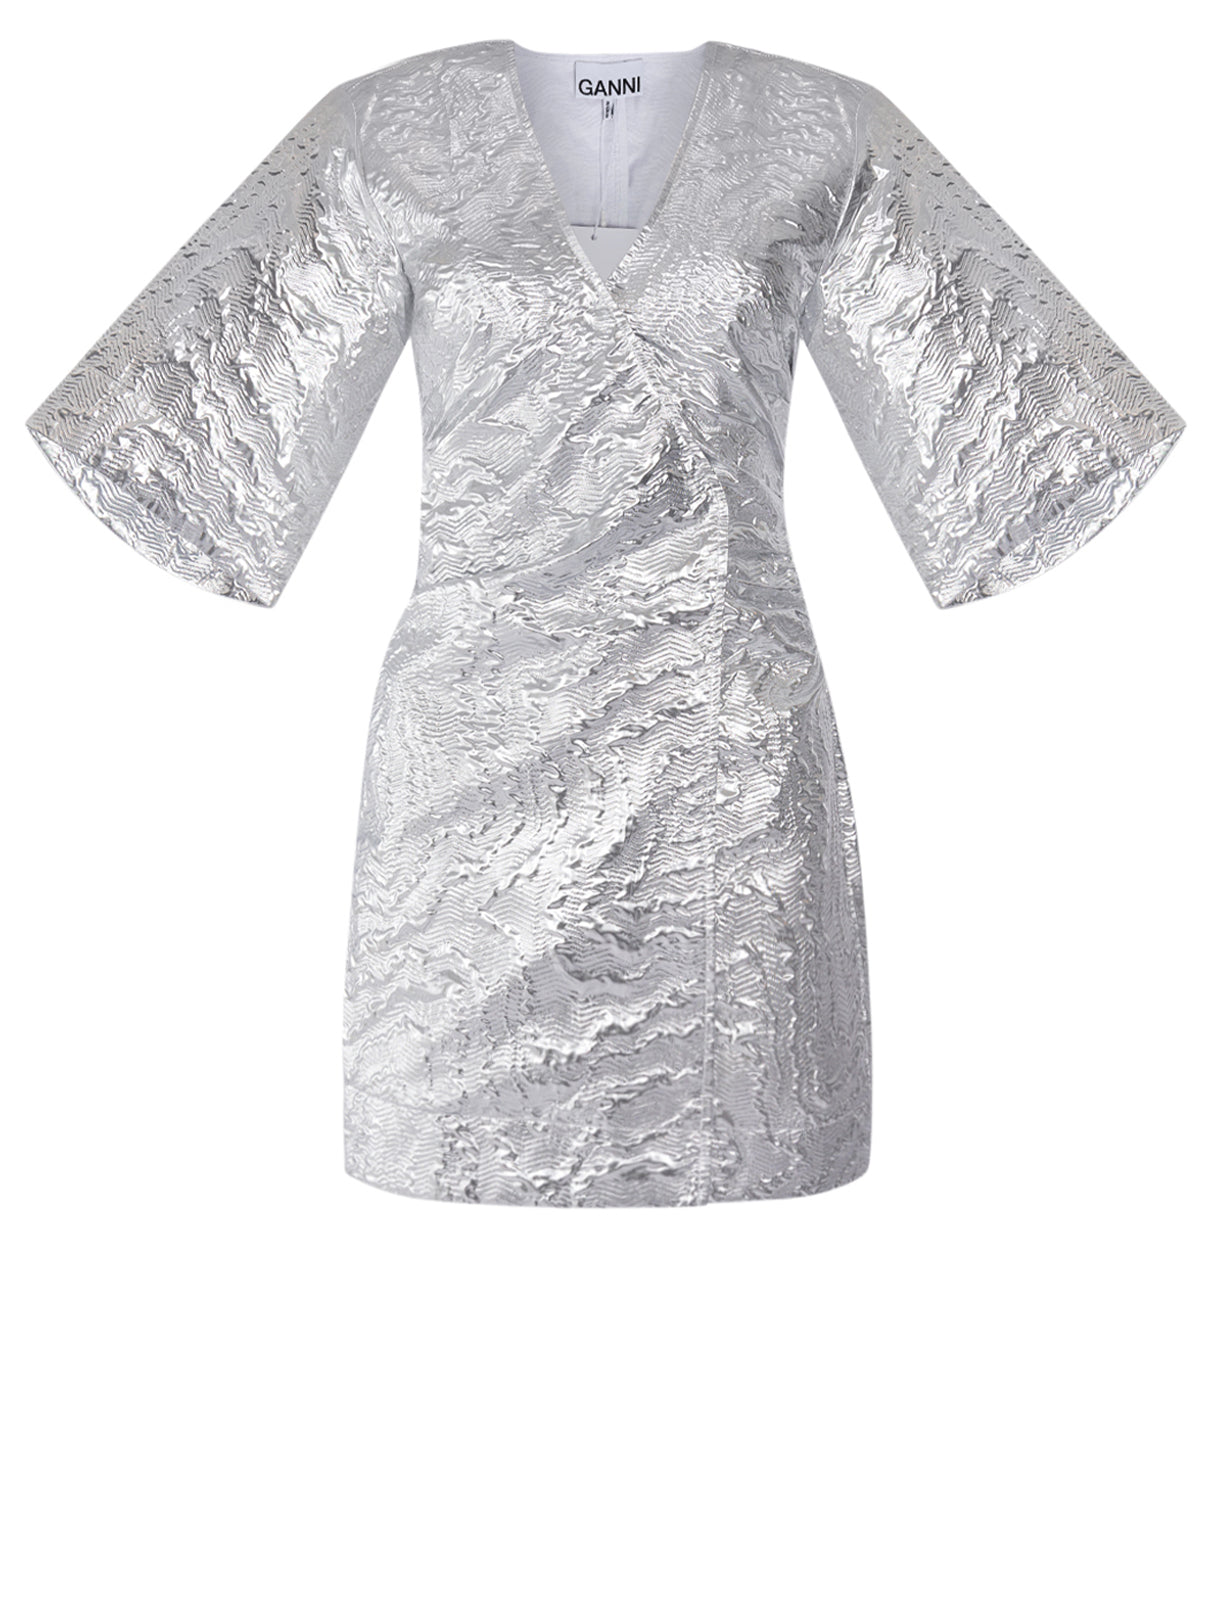 Metallic Jacquard Mini Dress